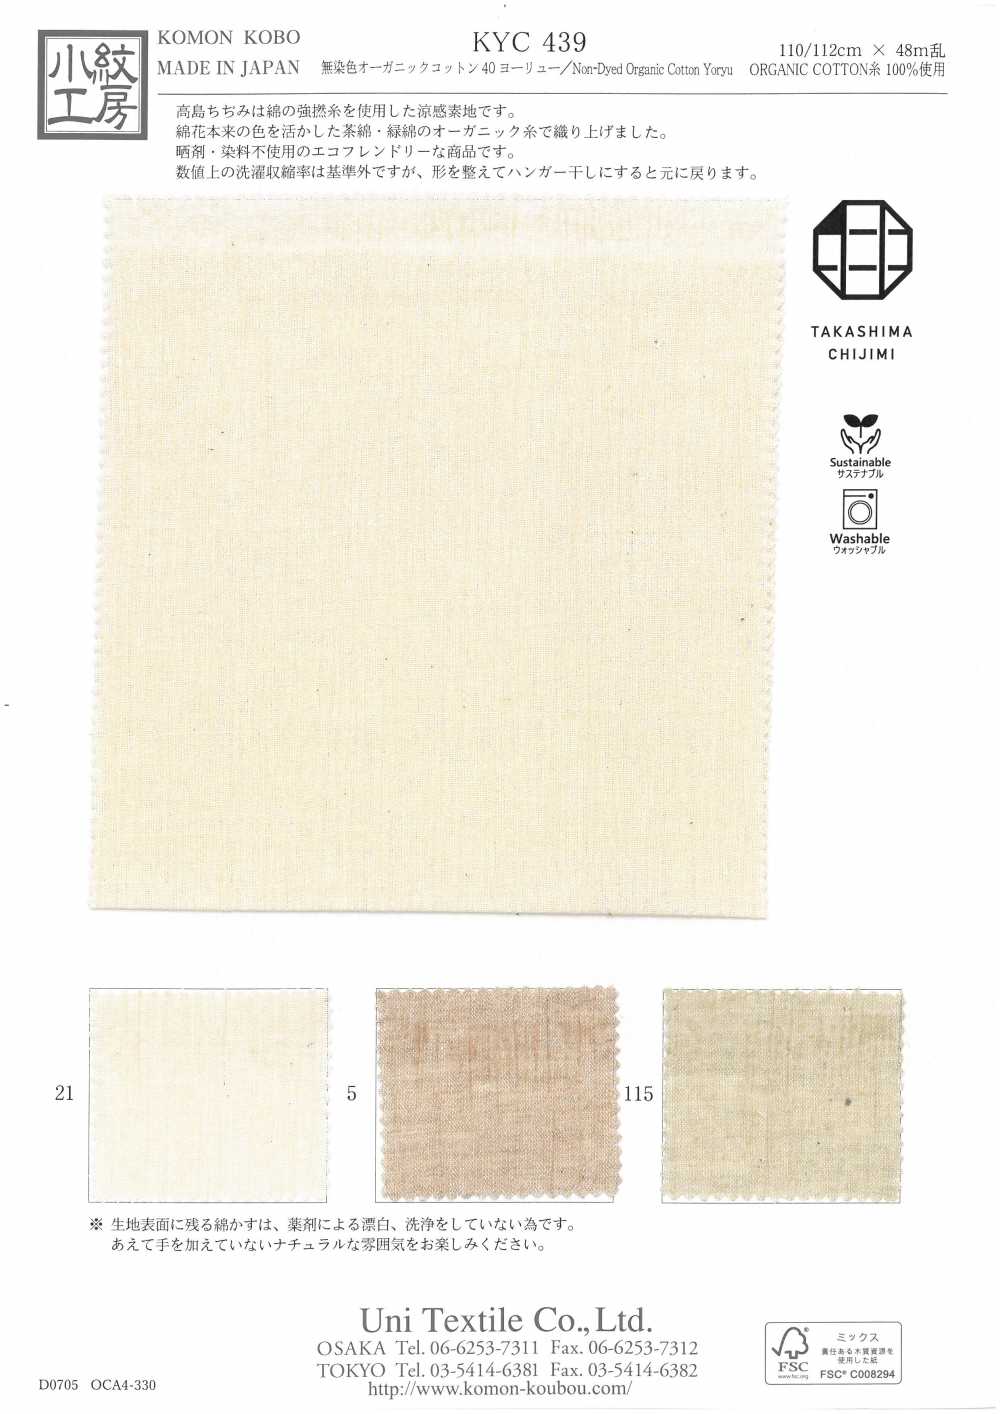 KYC439 Undyed Organic Cotton 40 Yoryu[Textile / Fabric] Uni Textile